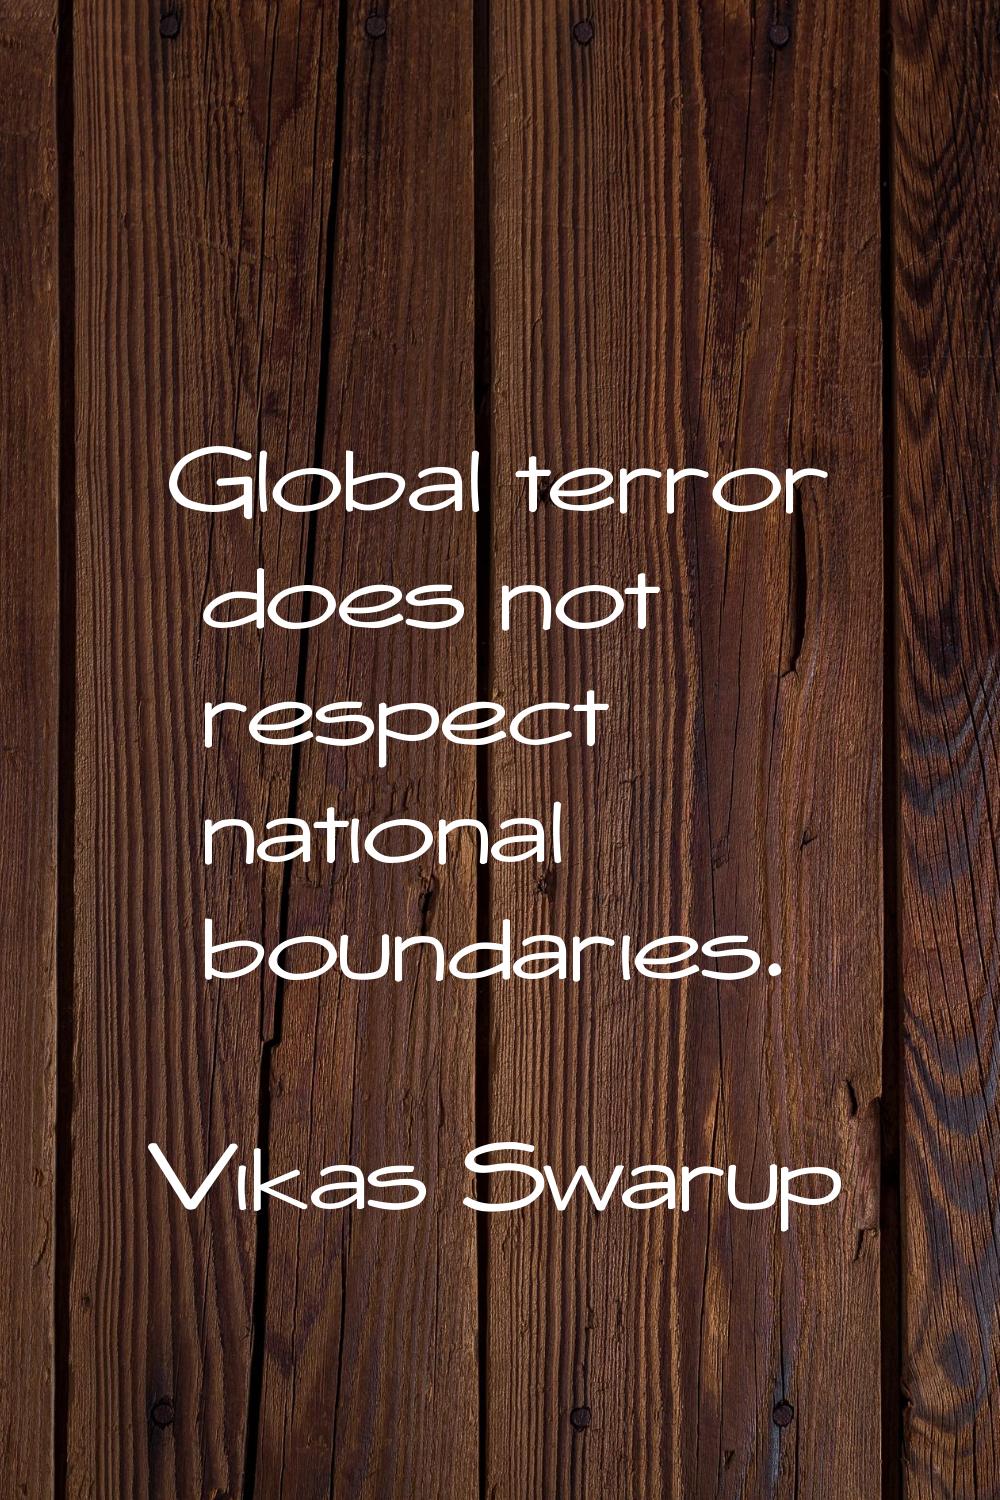 Global terror does not respect national boundaries.